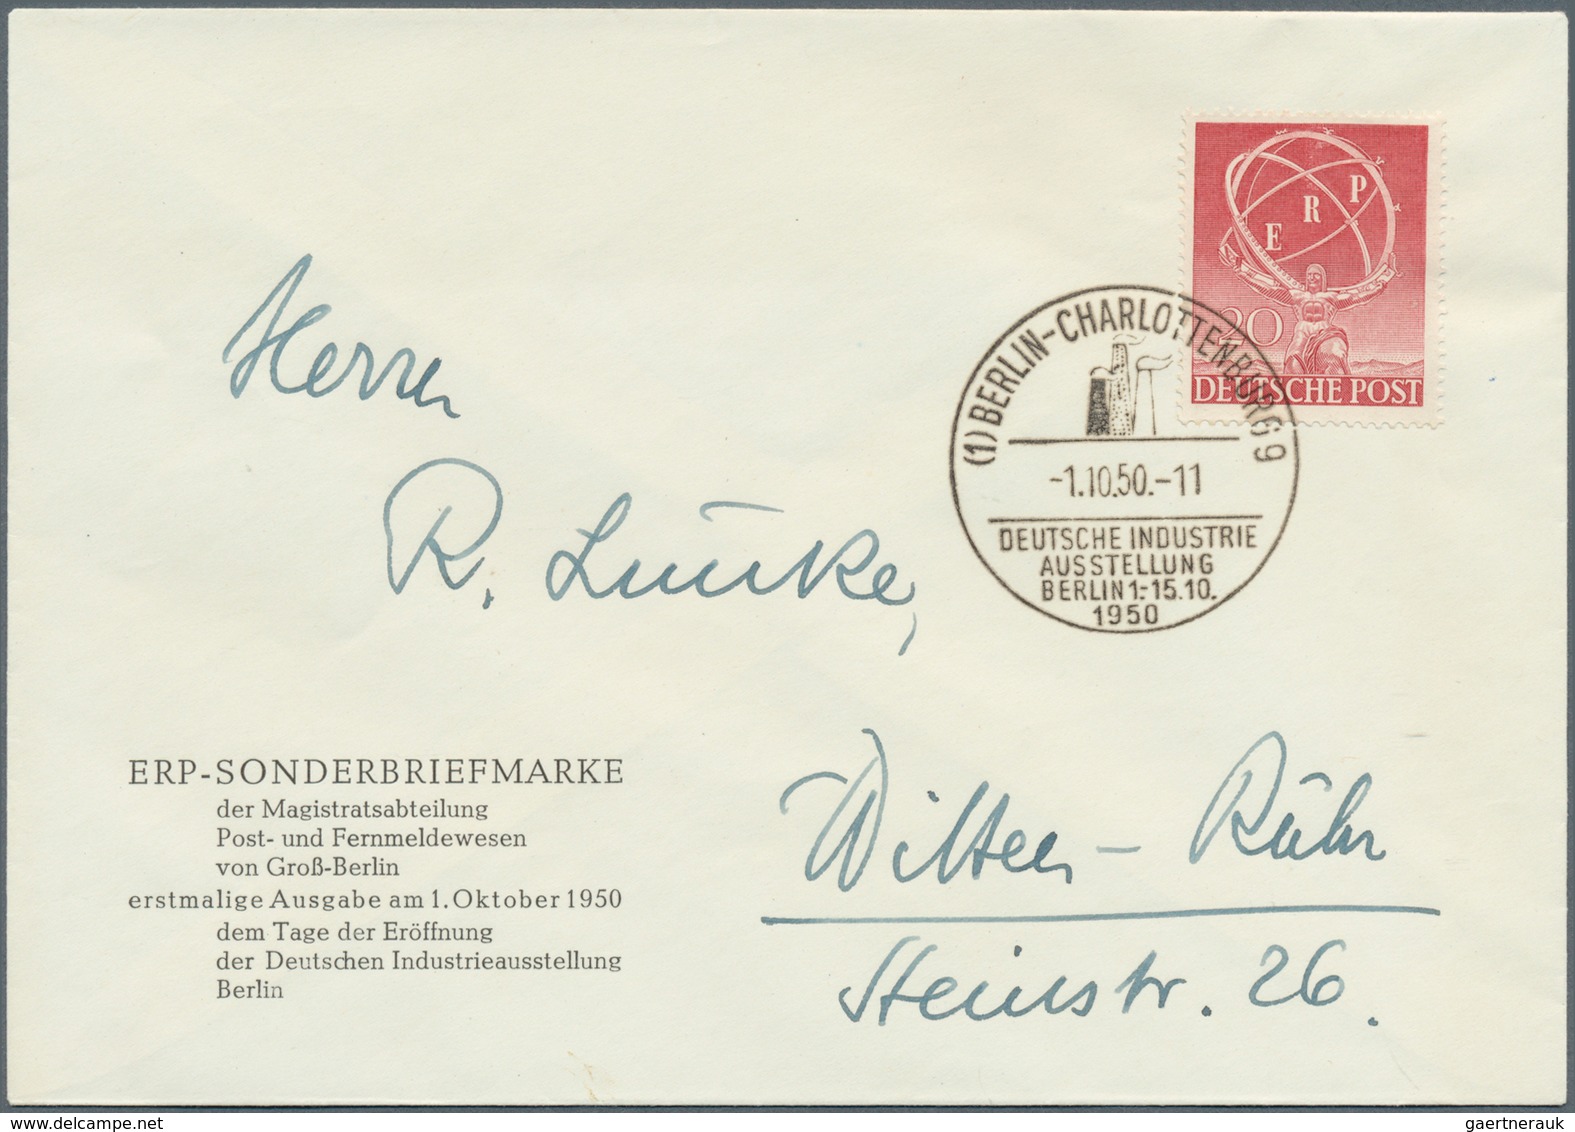 32491 Berlin: Ab 1949. Tolle Partie früher, guter Briefe, dabei 61/63 FDC, 4x 72/73 FDC, 4x 87 FDC, 3x 80/